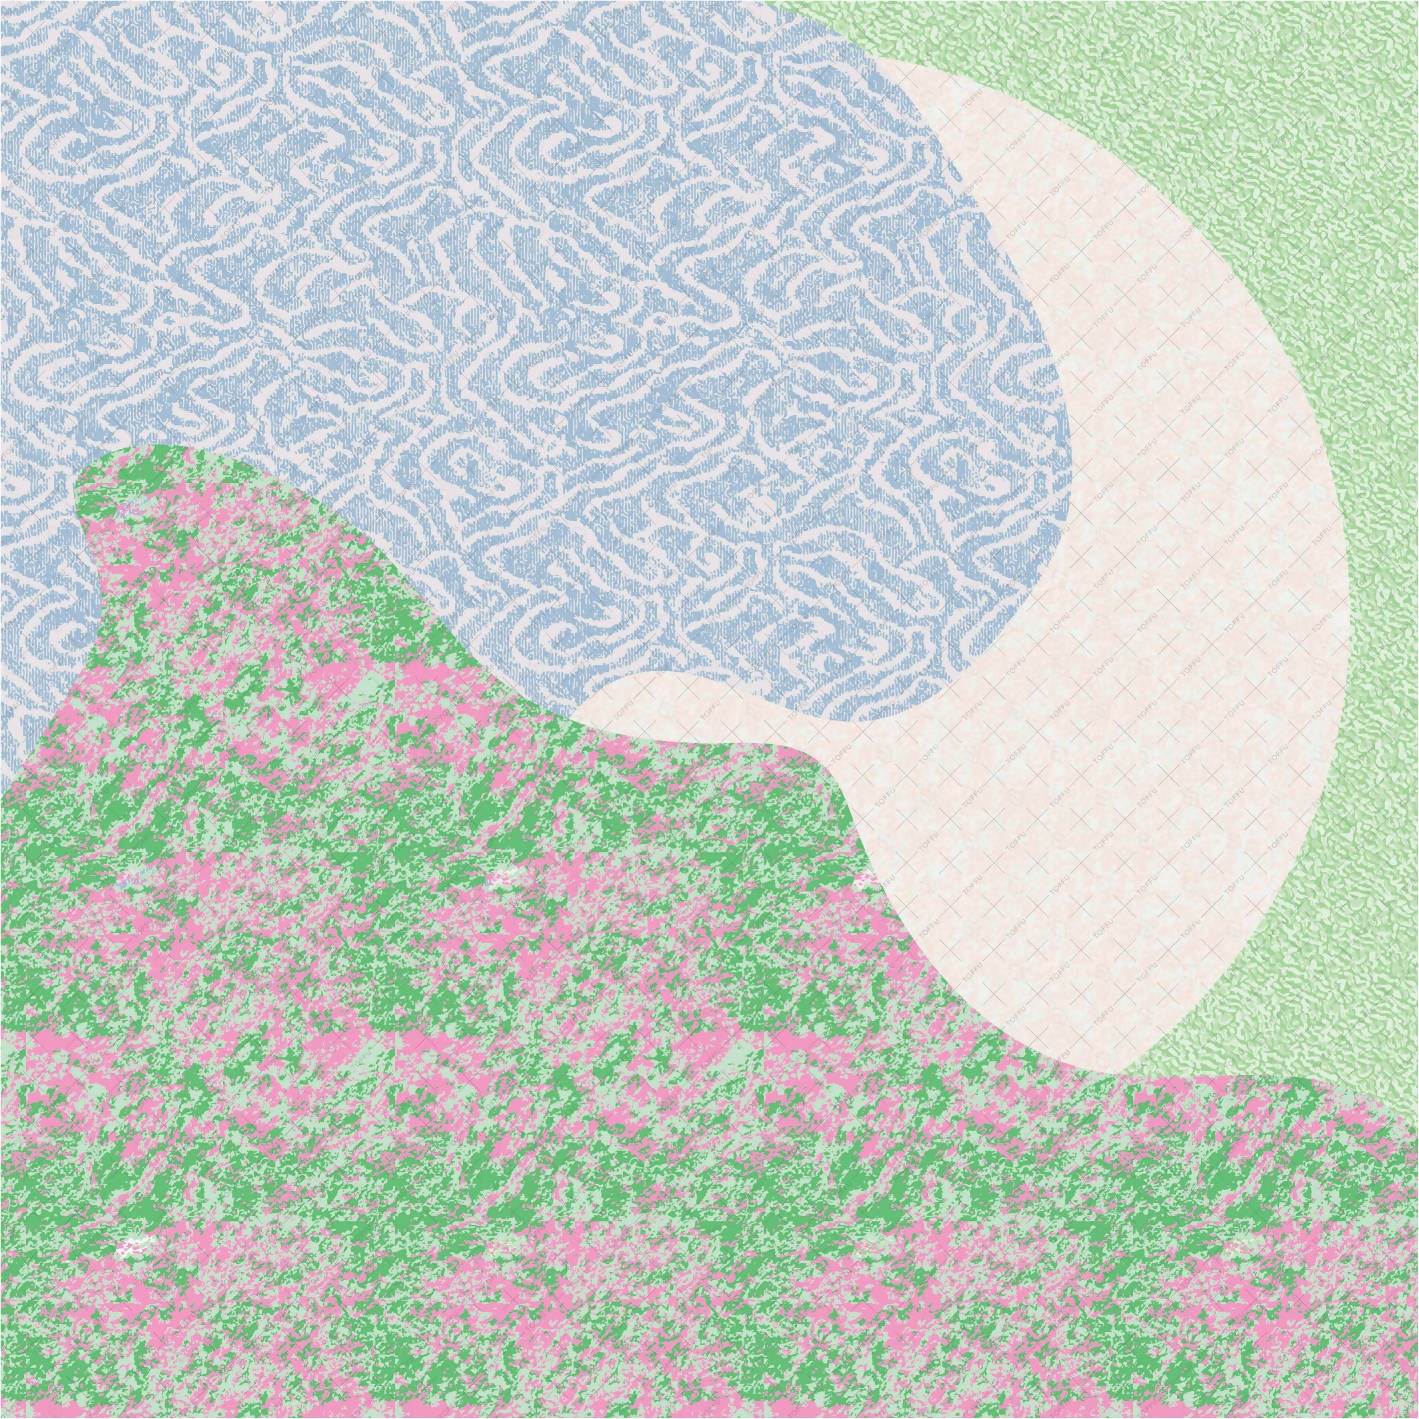 Swatch Landscape Textures AI | Toffu Co